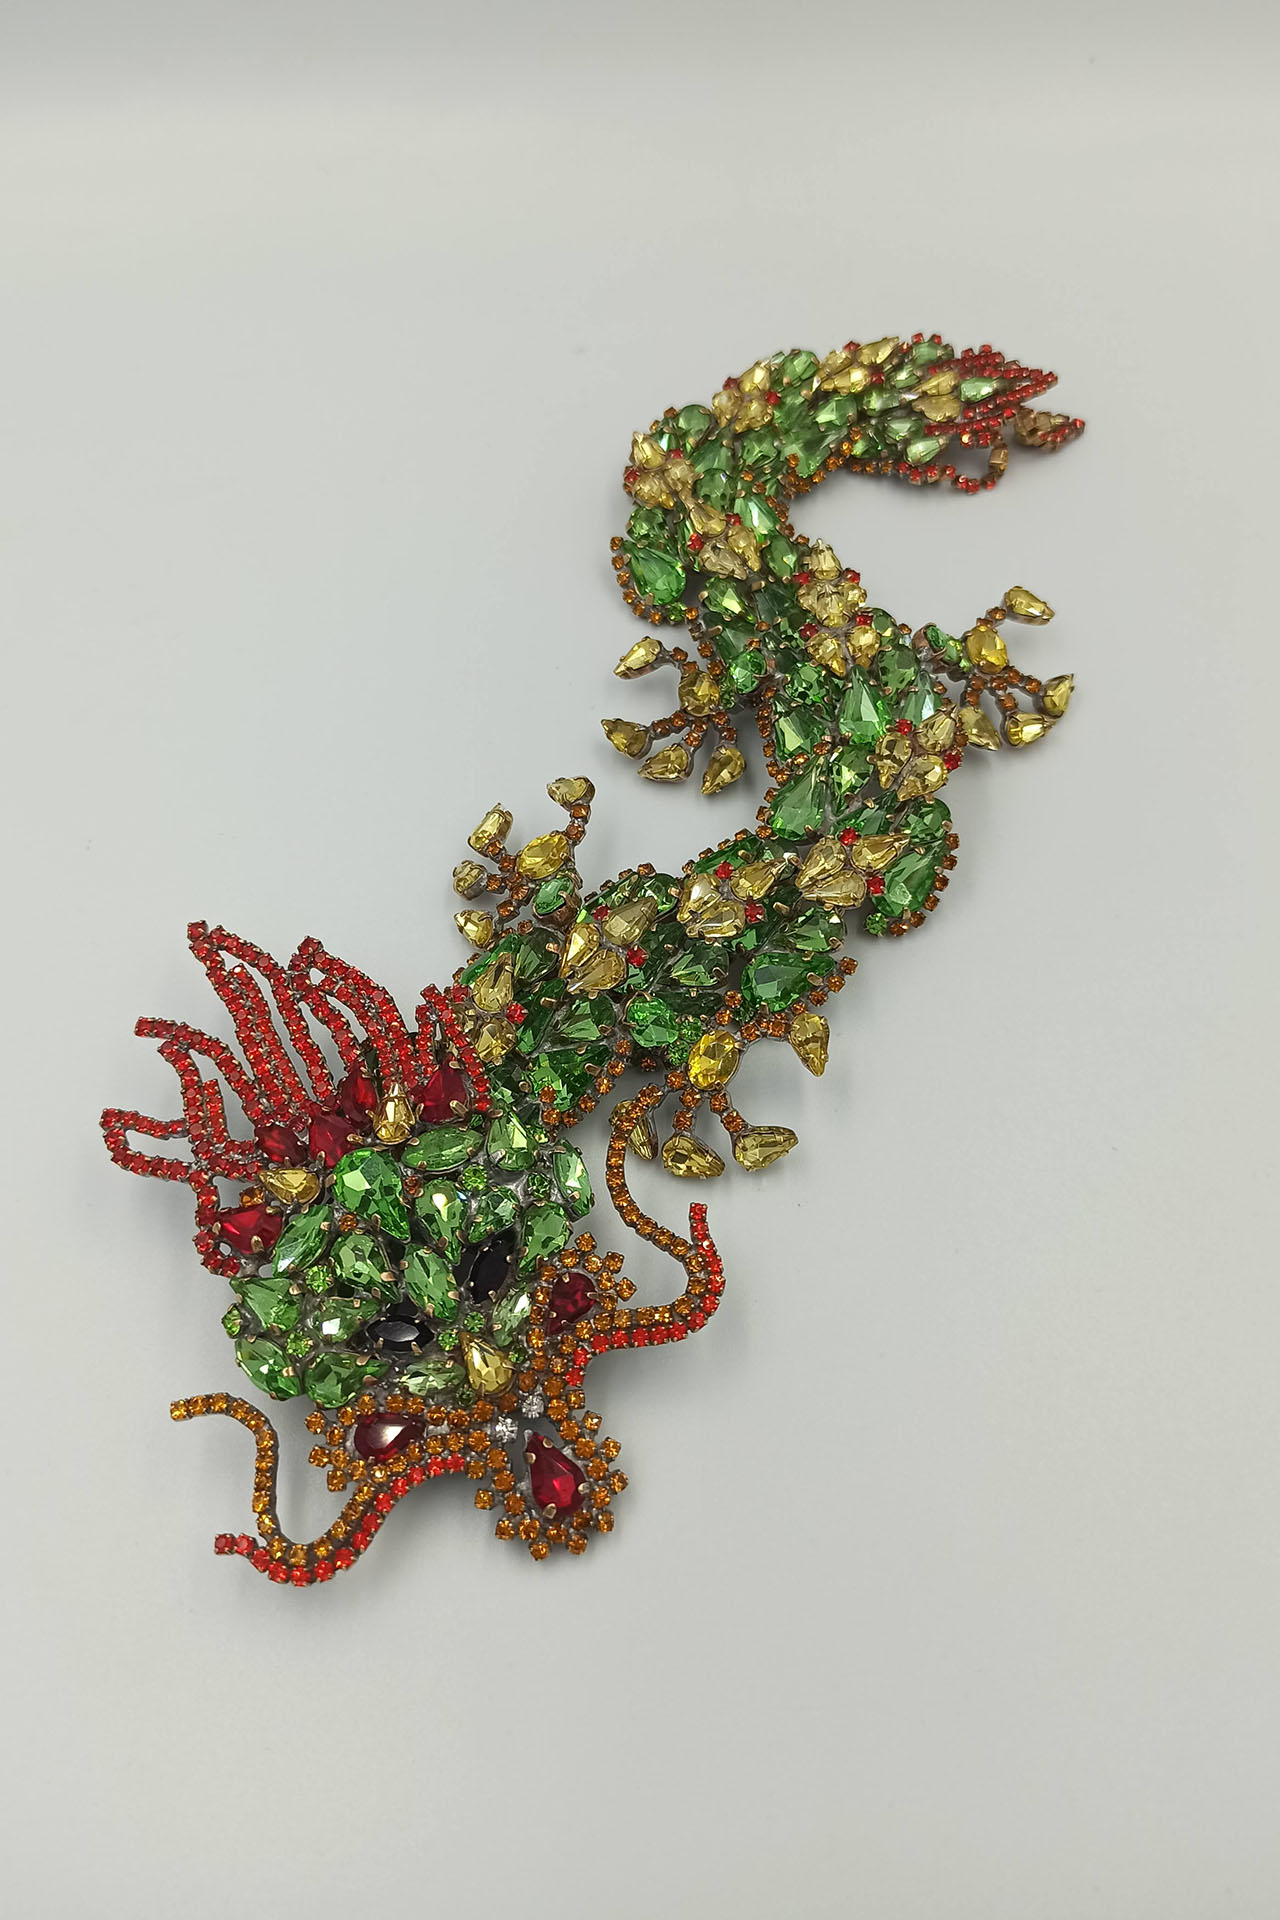 Handmade rhinestone brooch with a green Chinese dragon